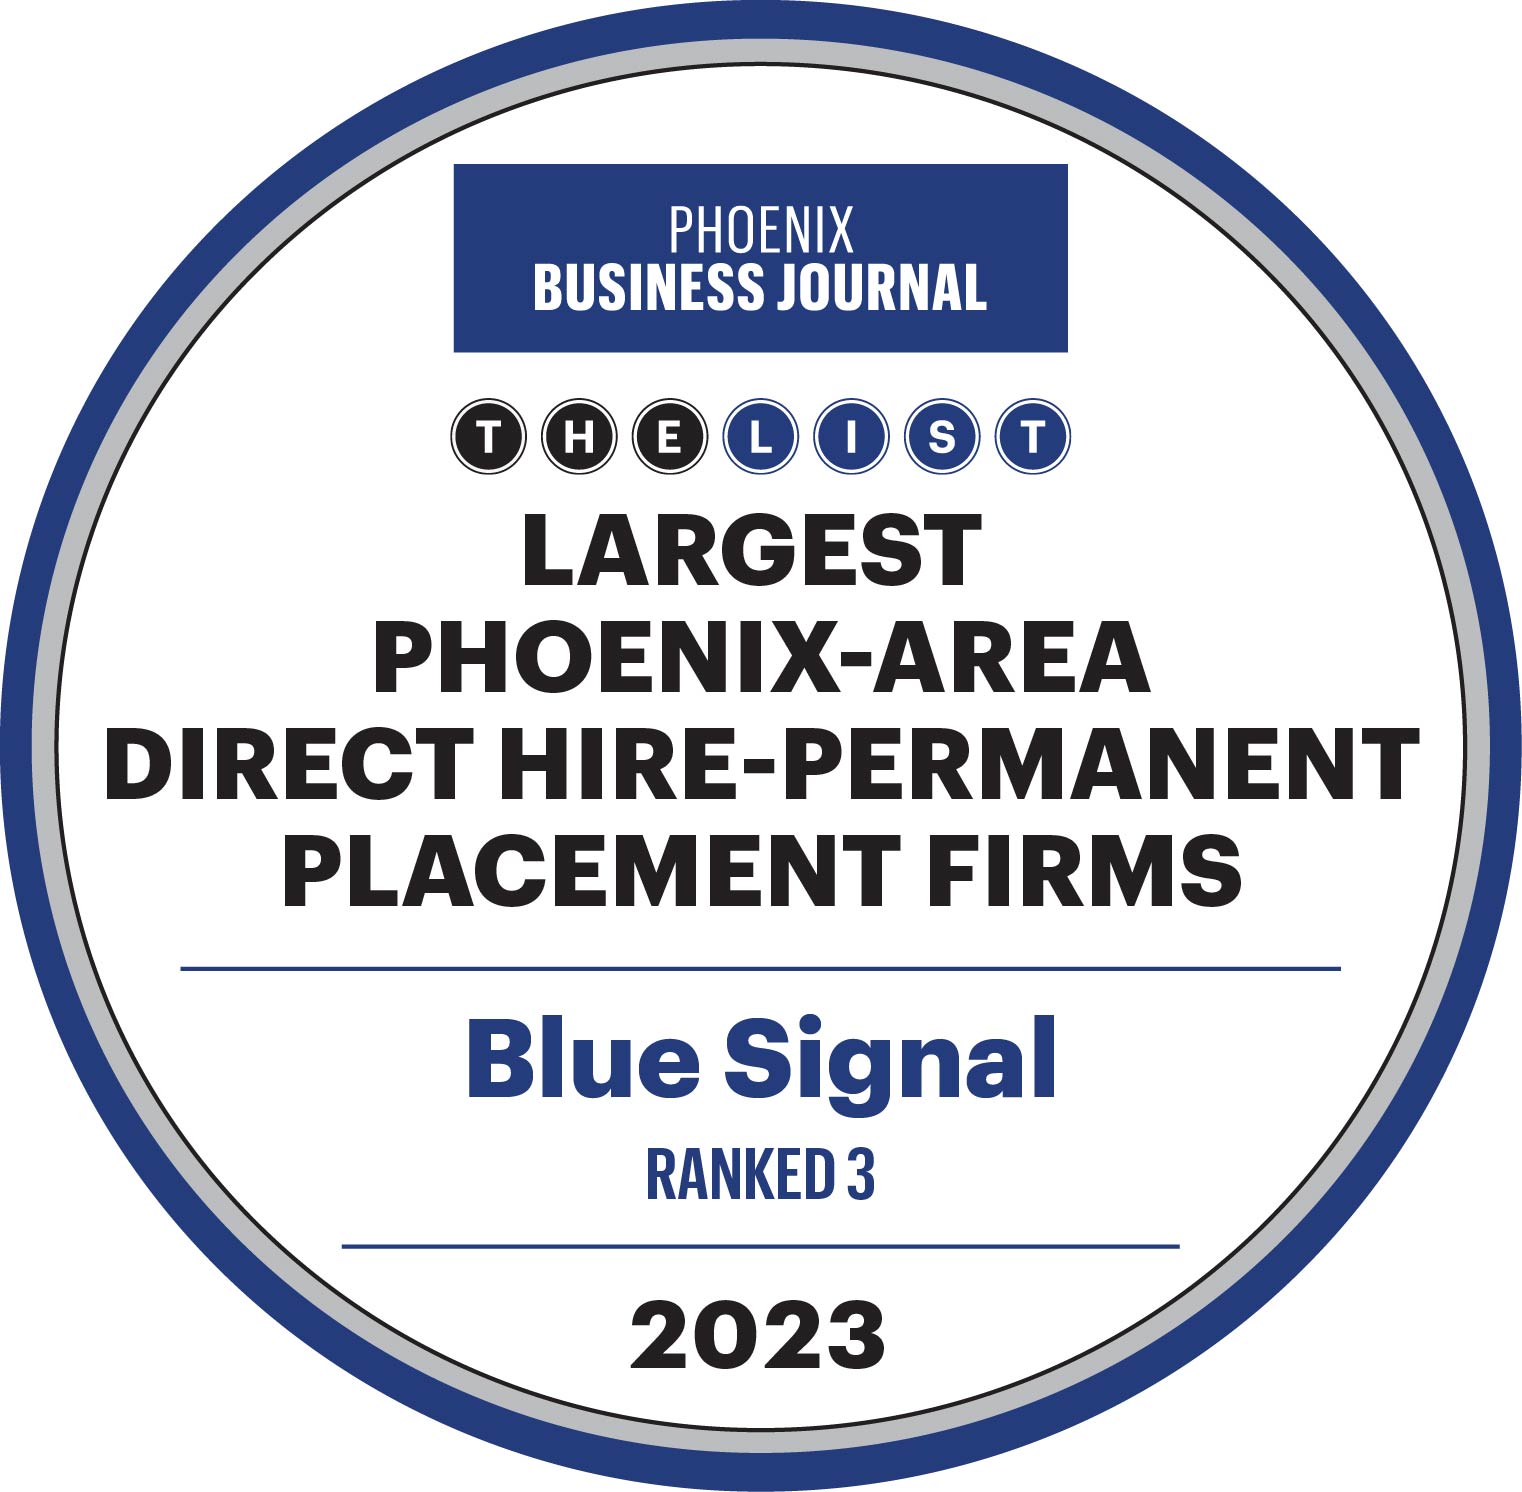 PBJ - Largest Phoenix-Area Direct Hire-Permanent Placement Firms: Blue Signal Ranked 3